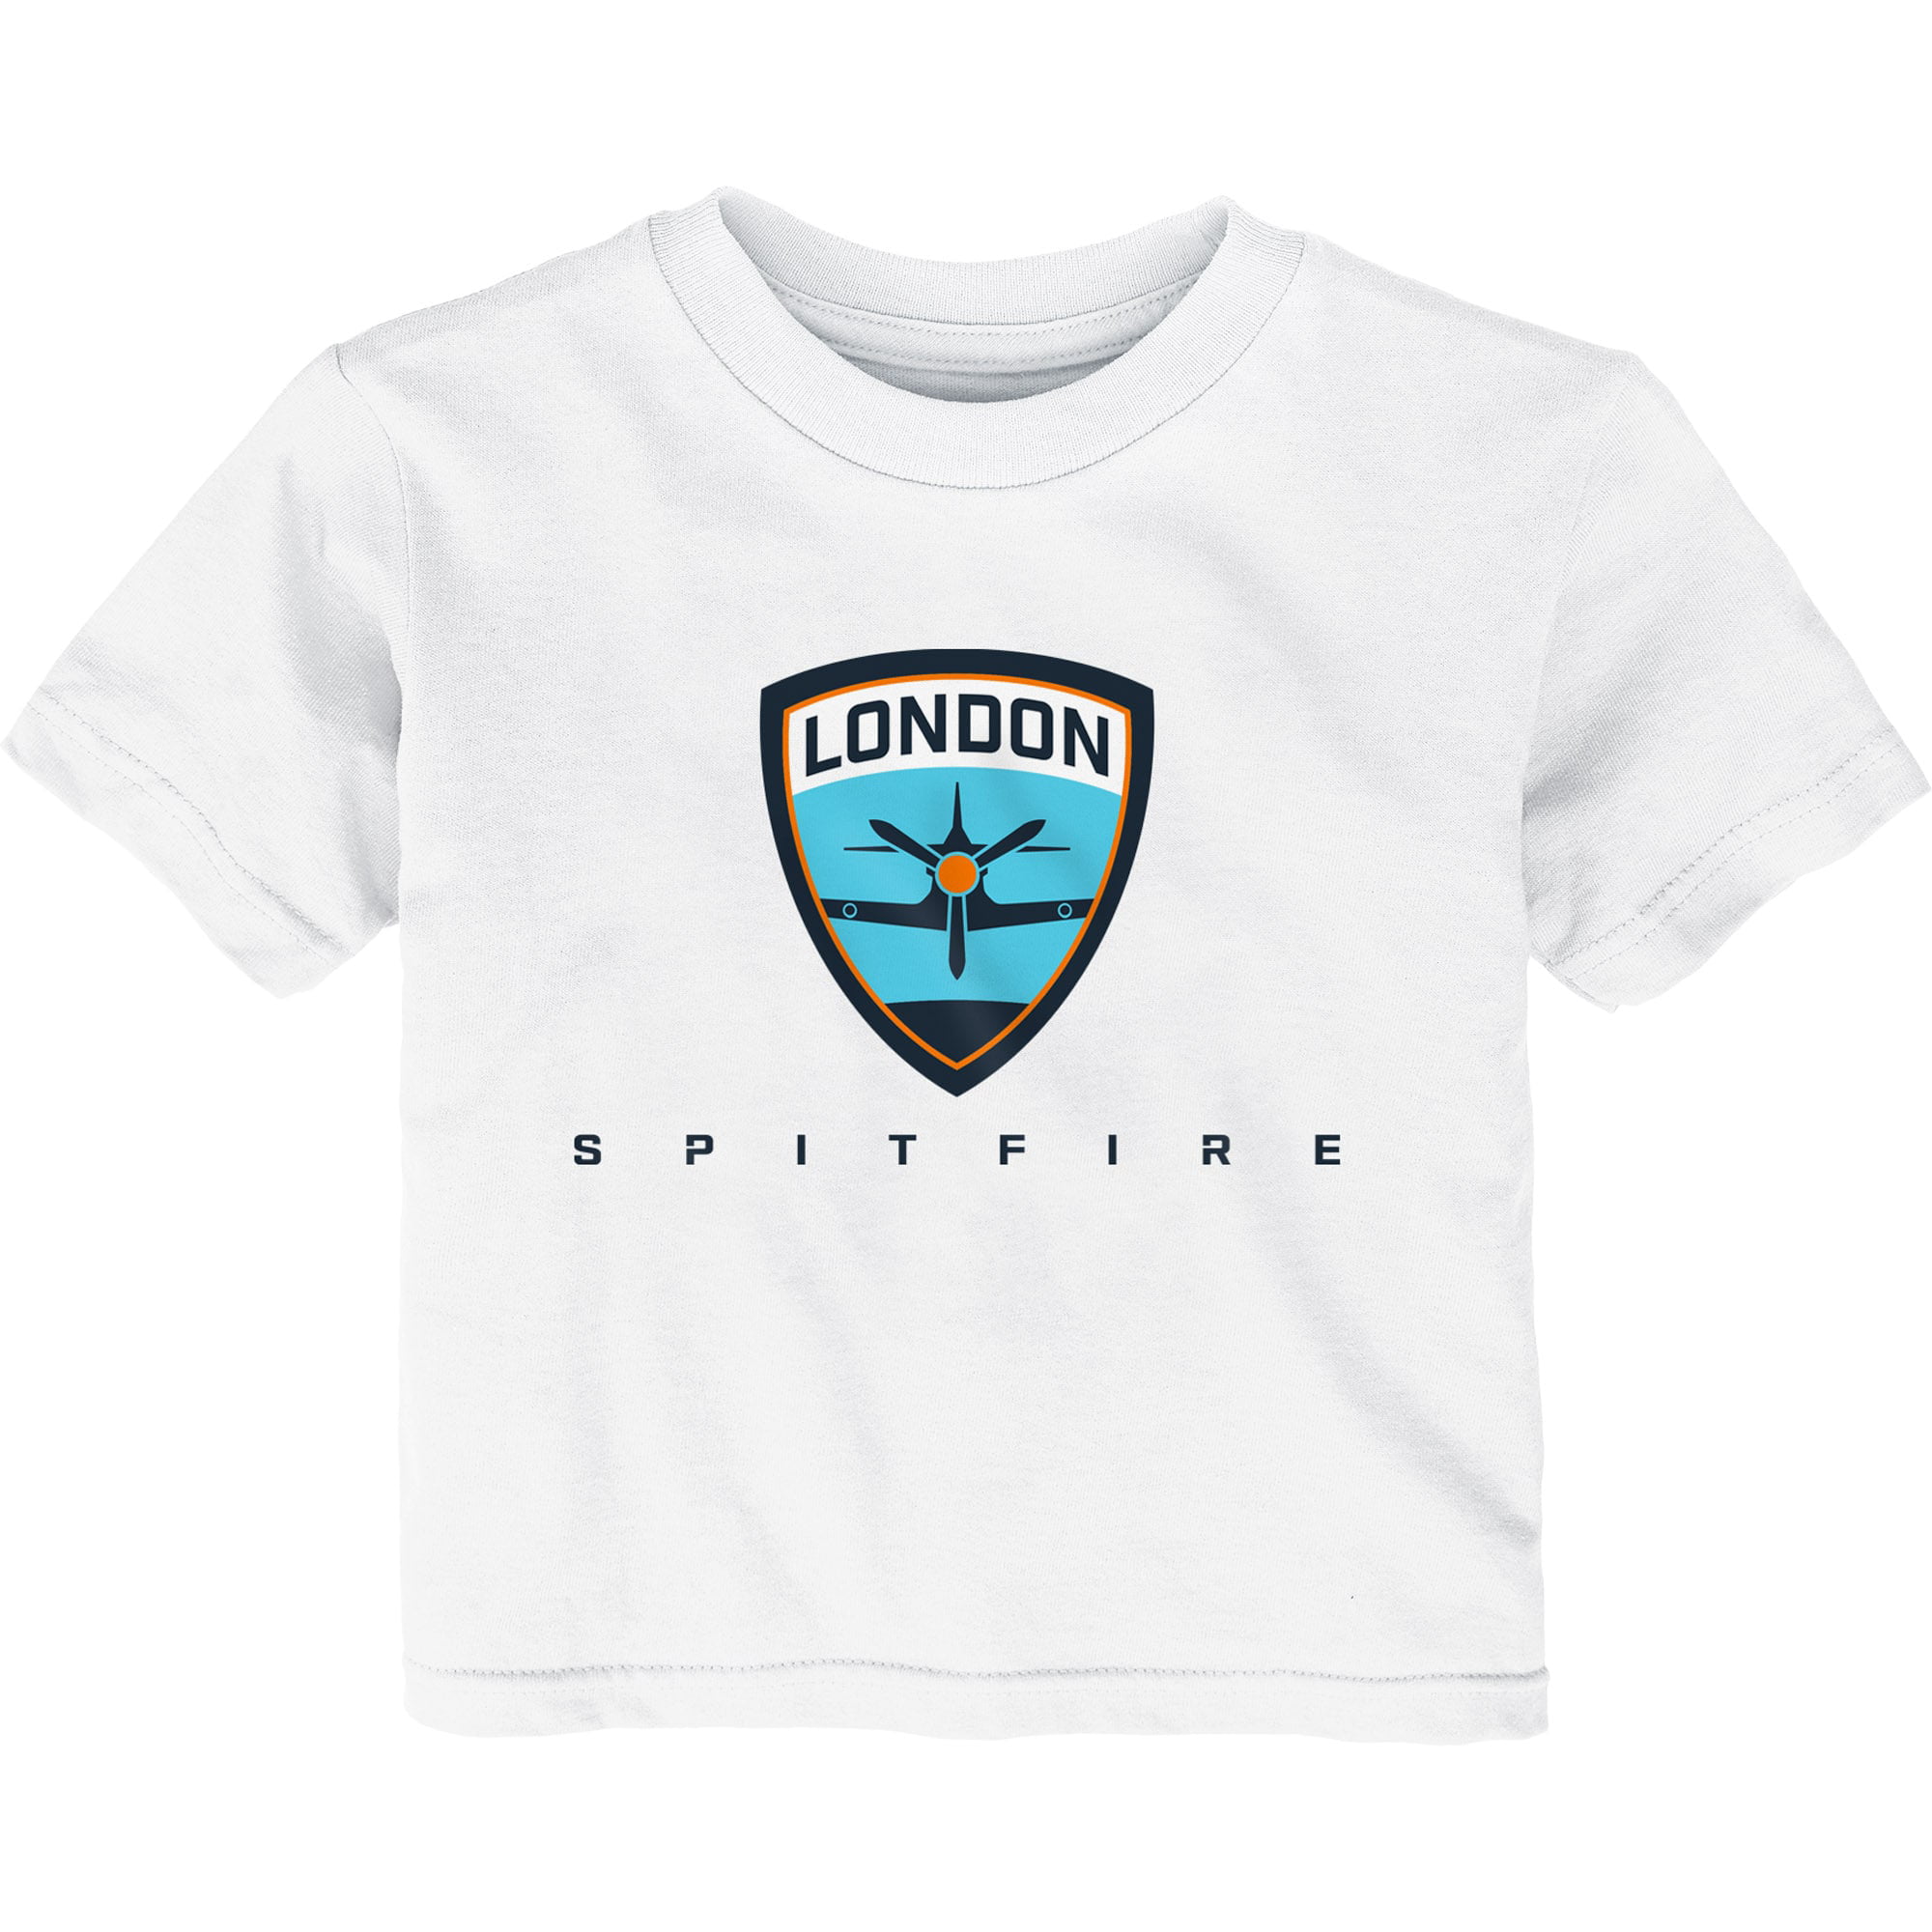 Toddler White London Spitfire Overwatch League Team Identity T-Shirt